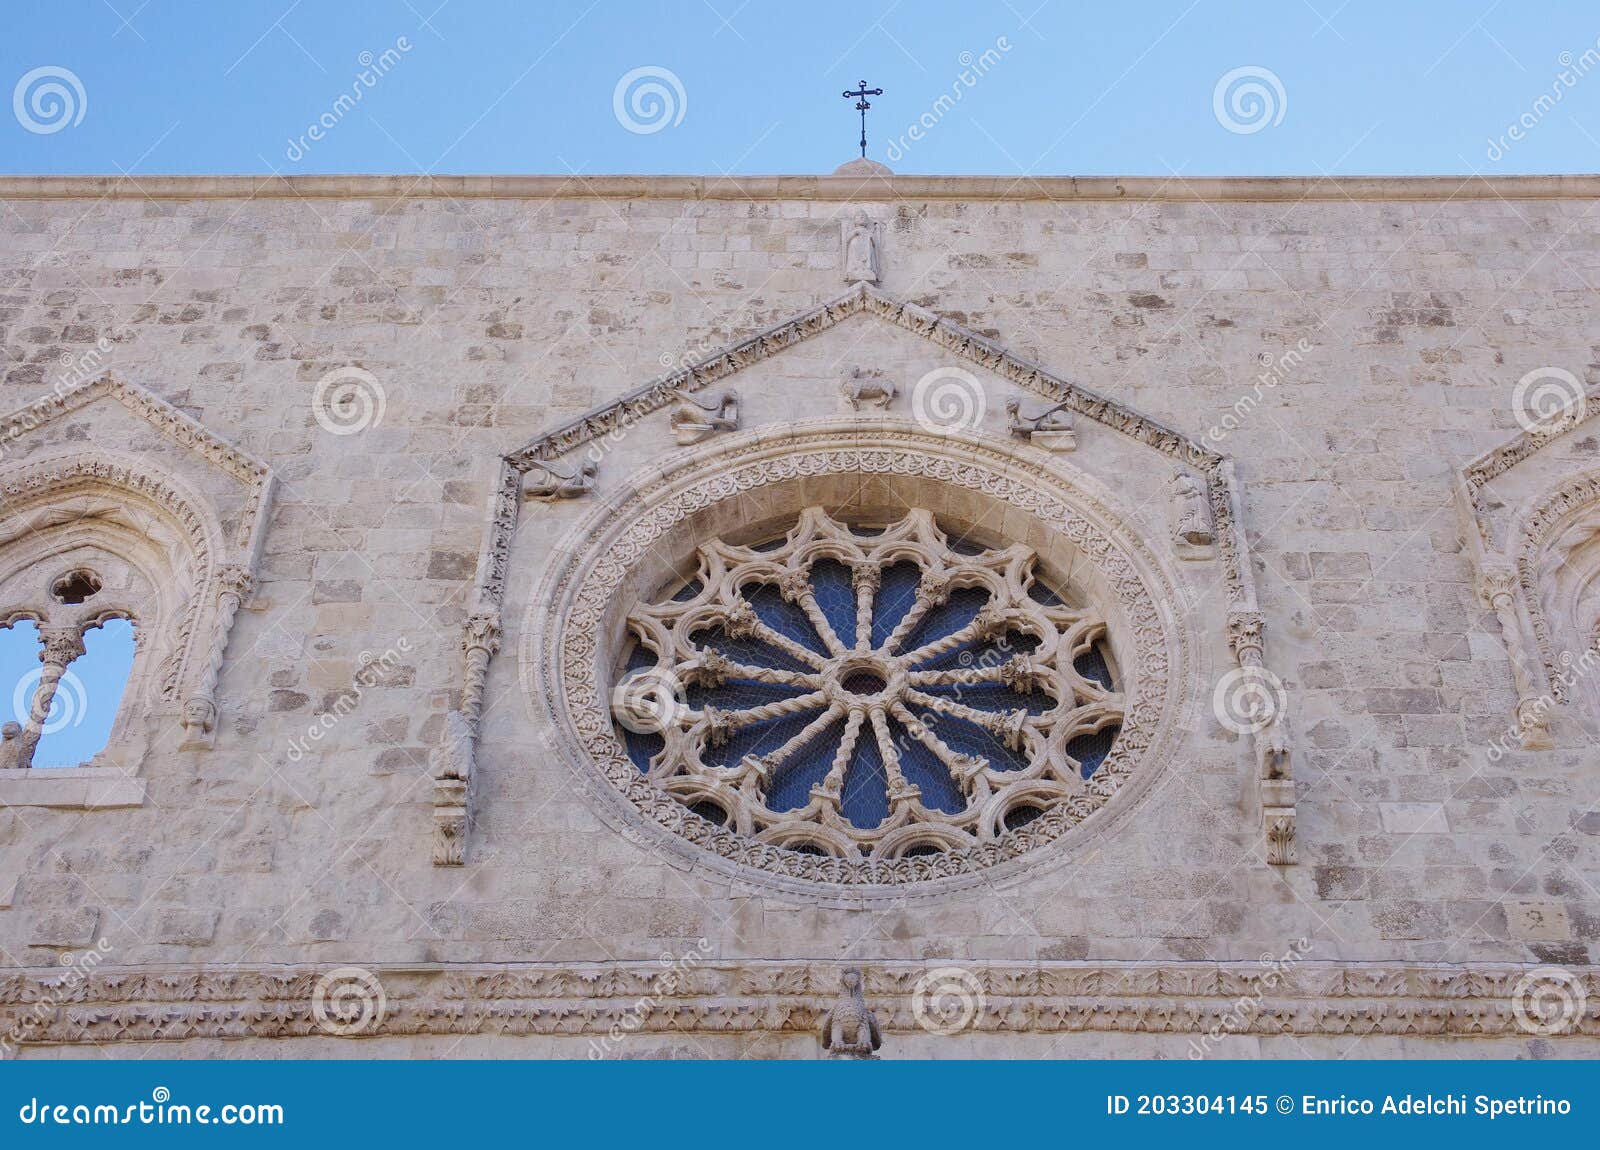 larino - molise - cathedral of san pardo - detail of the rose window